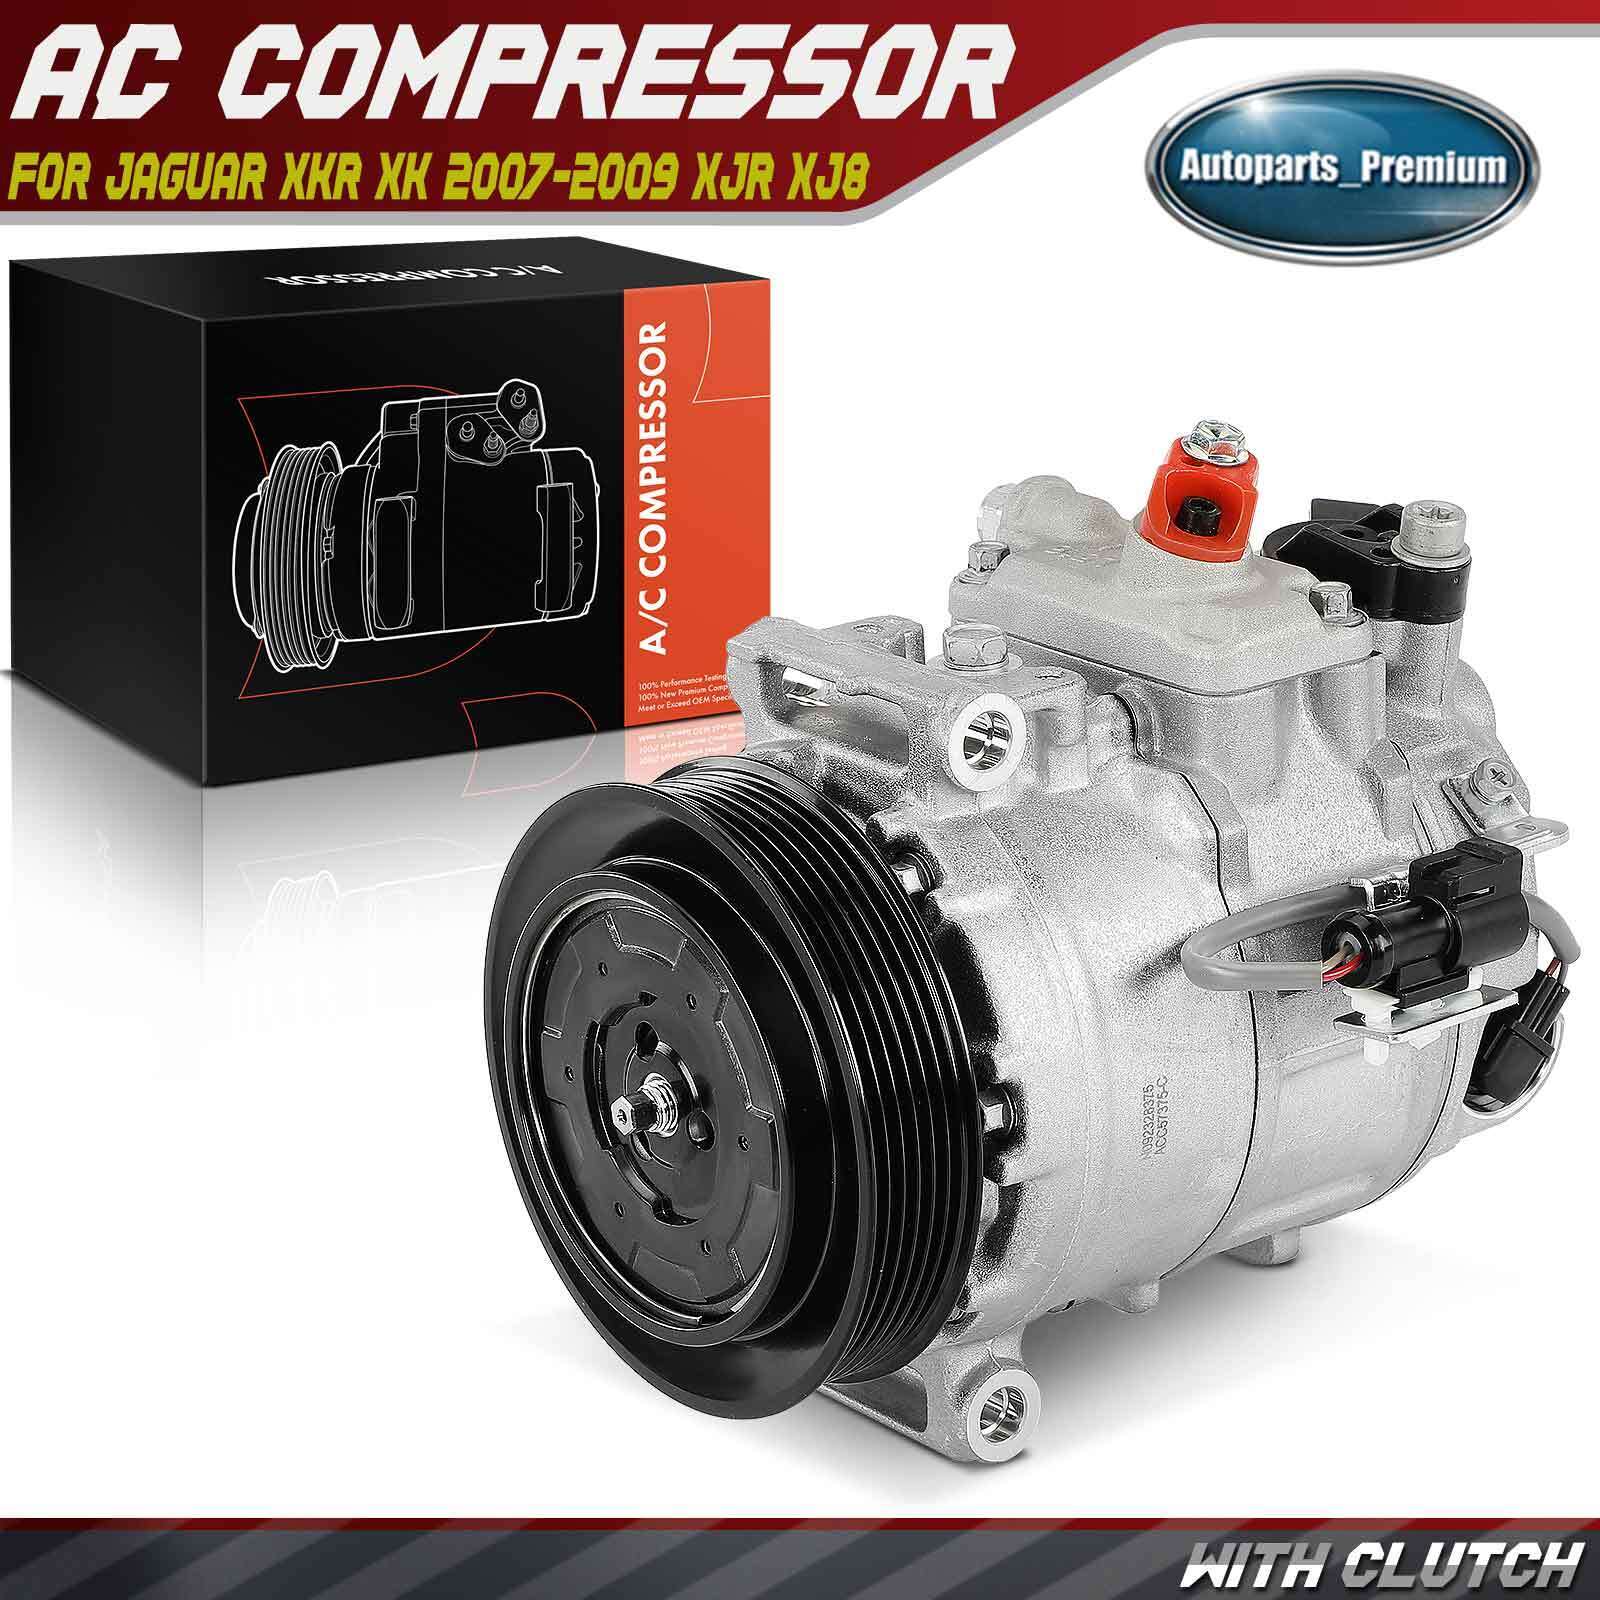 A/C Compressor for Jaguar XKR XK 07-09 XJR XJ8 Vanden Plas 04-09 Super V8 05-09